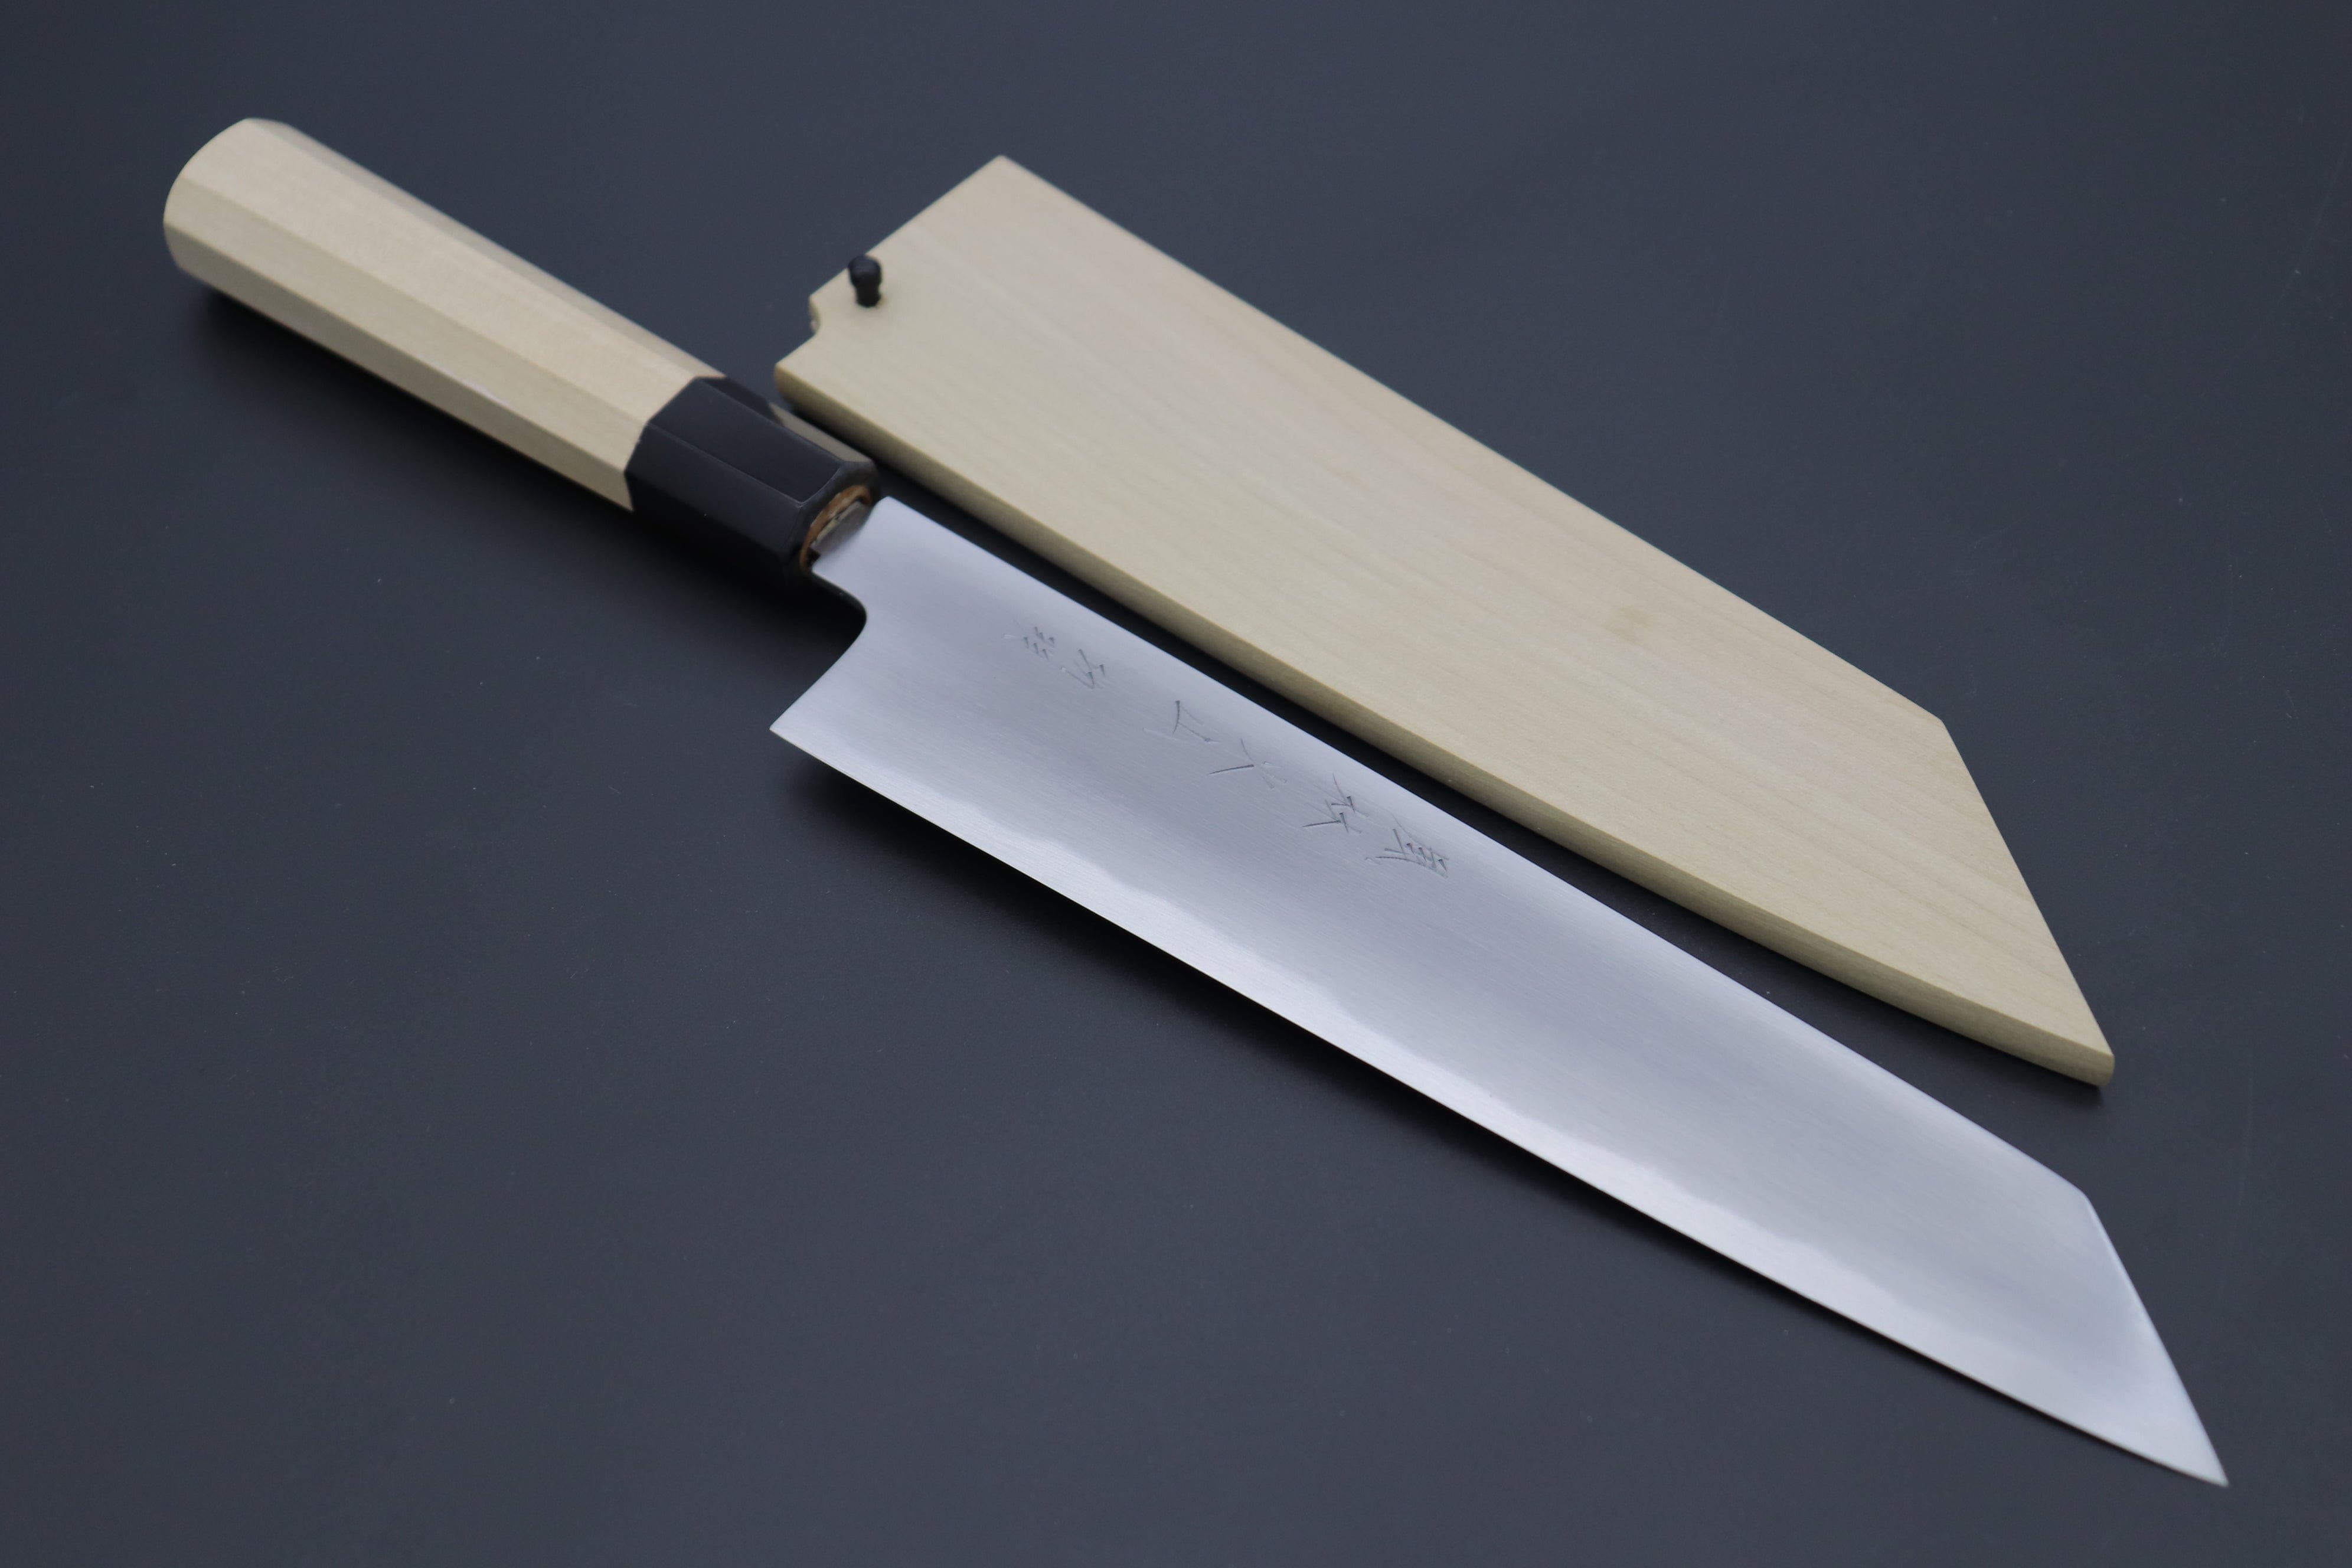 Ritsu 2 Piece Kitchen Knife Set WF-B85A004464-ZZY